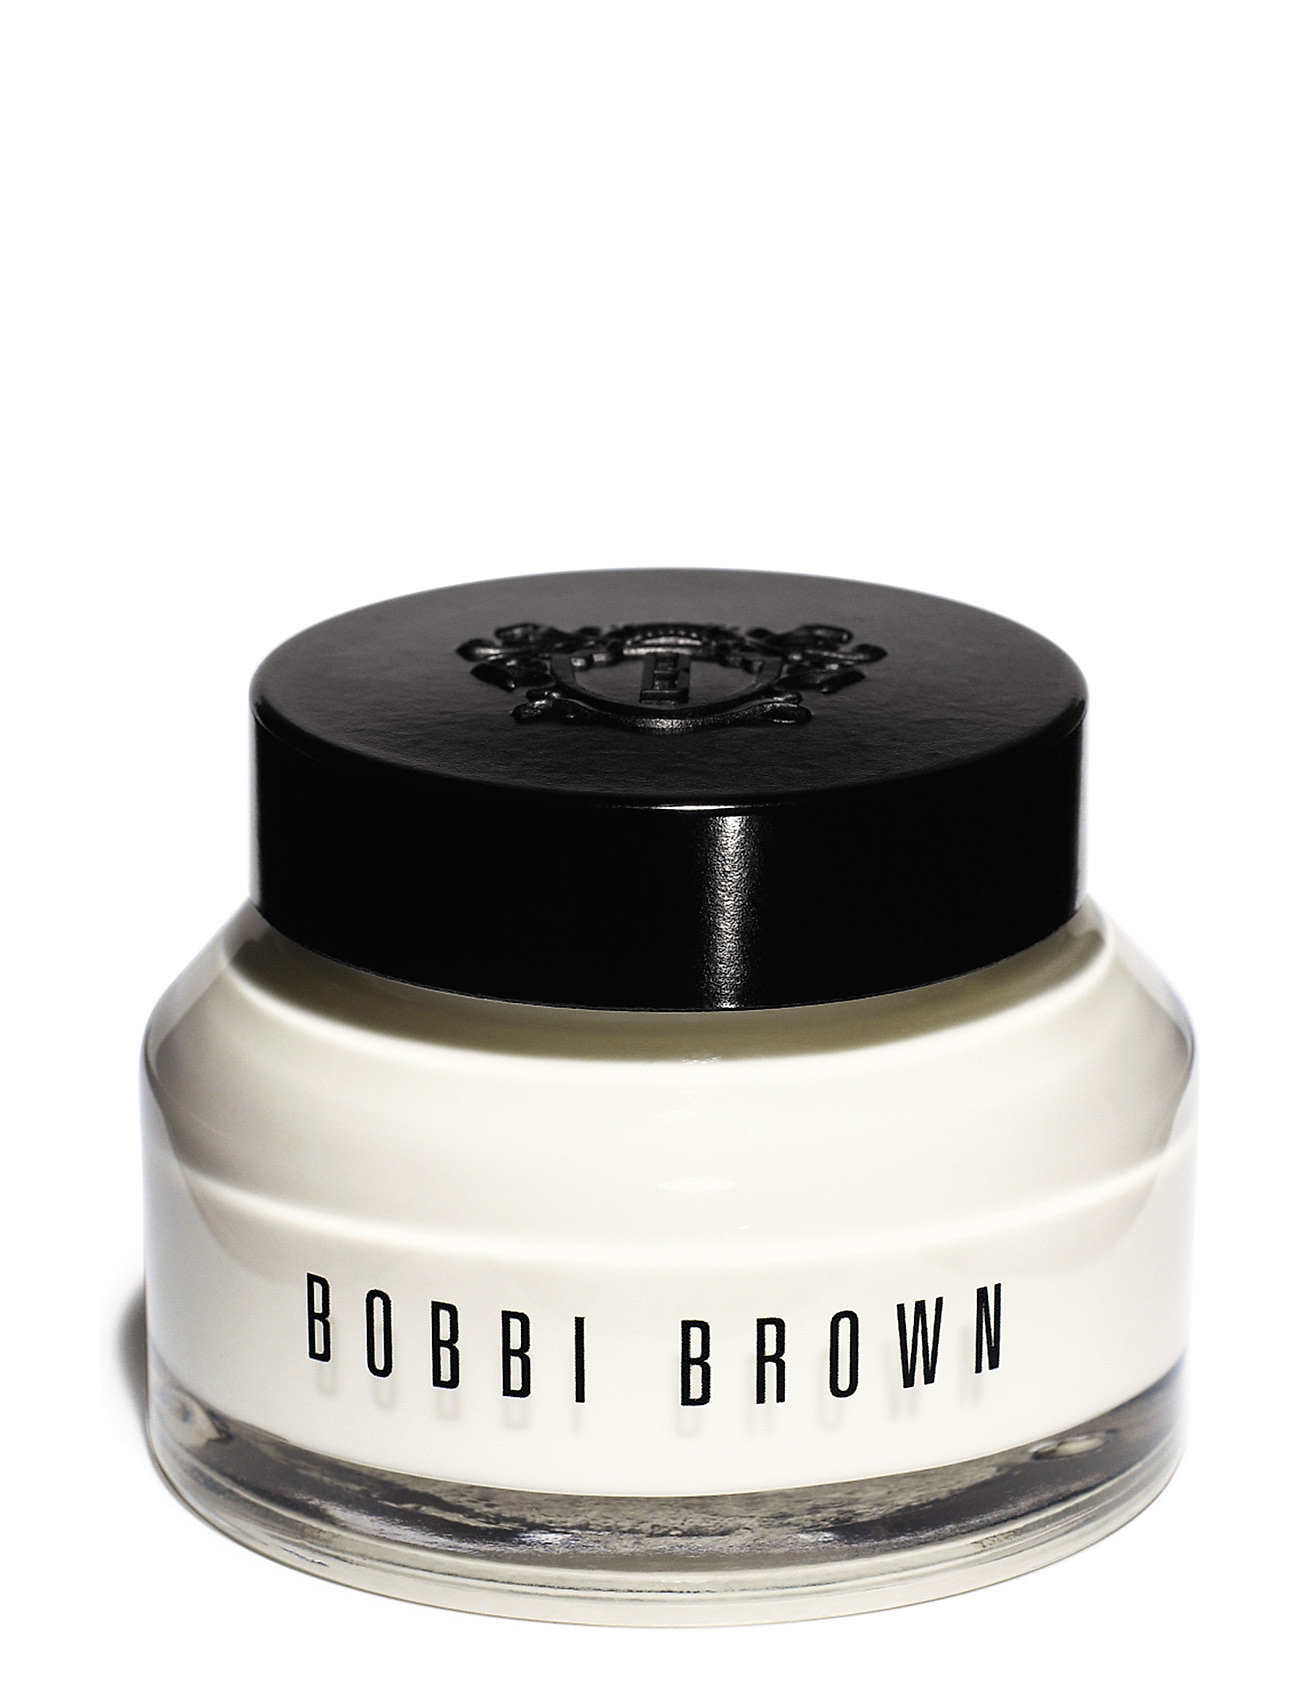 Hydrating Face Cream Beauty WOMEN Skin Care Face Day Creams Nude Bobbi Brown